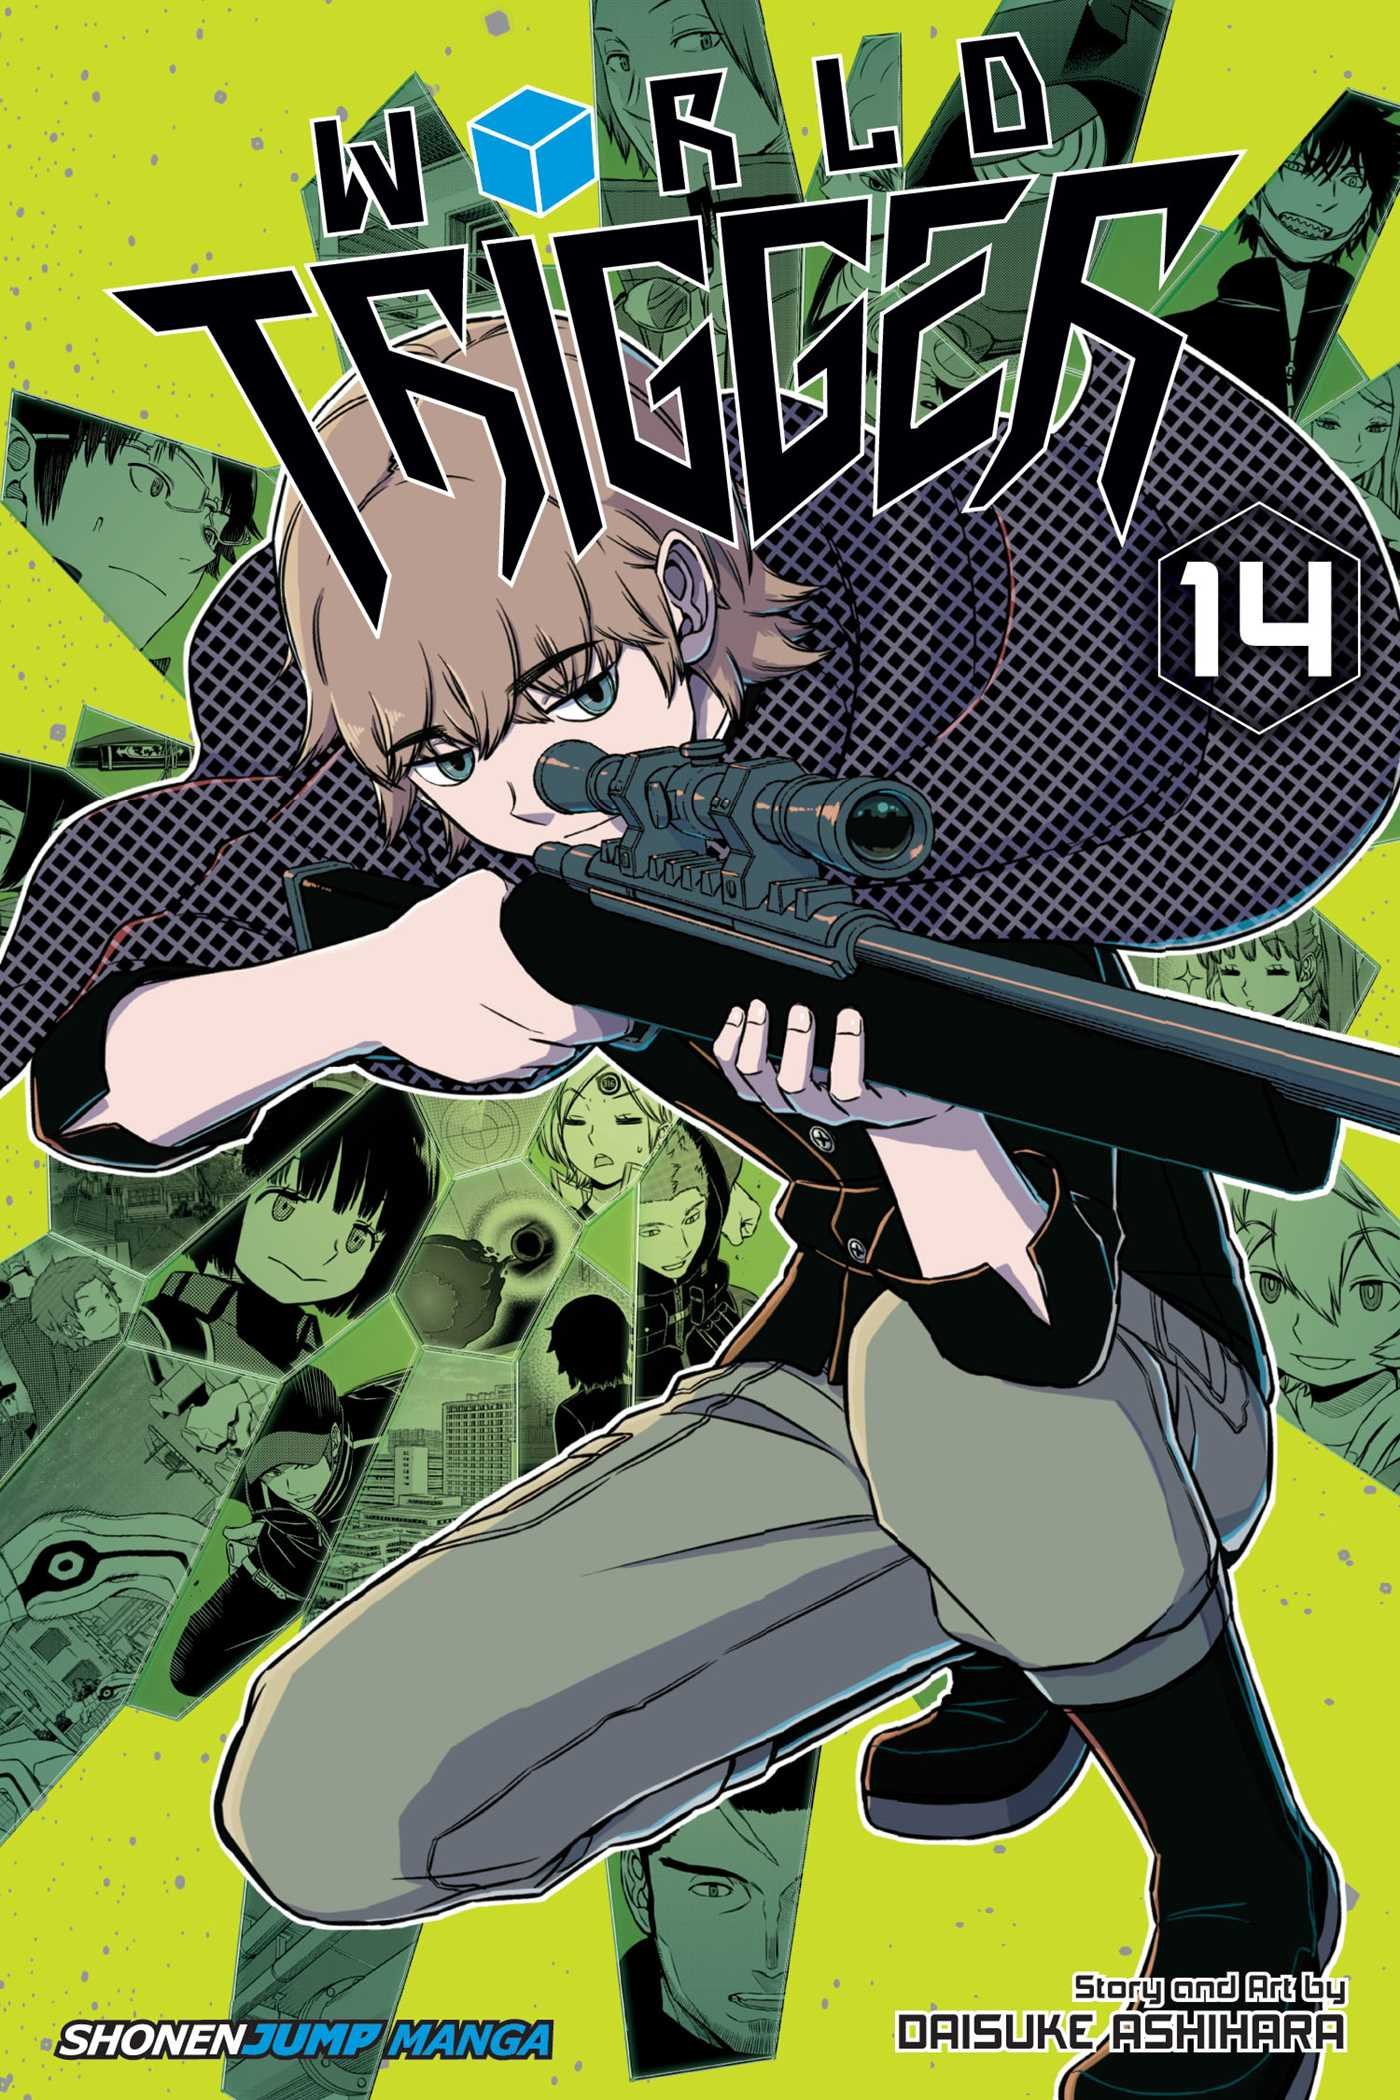 World Trigger - Volume 14